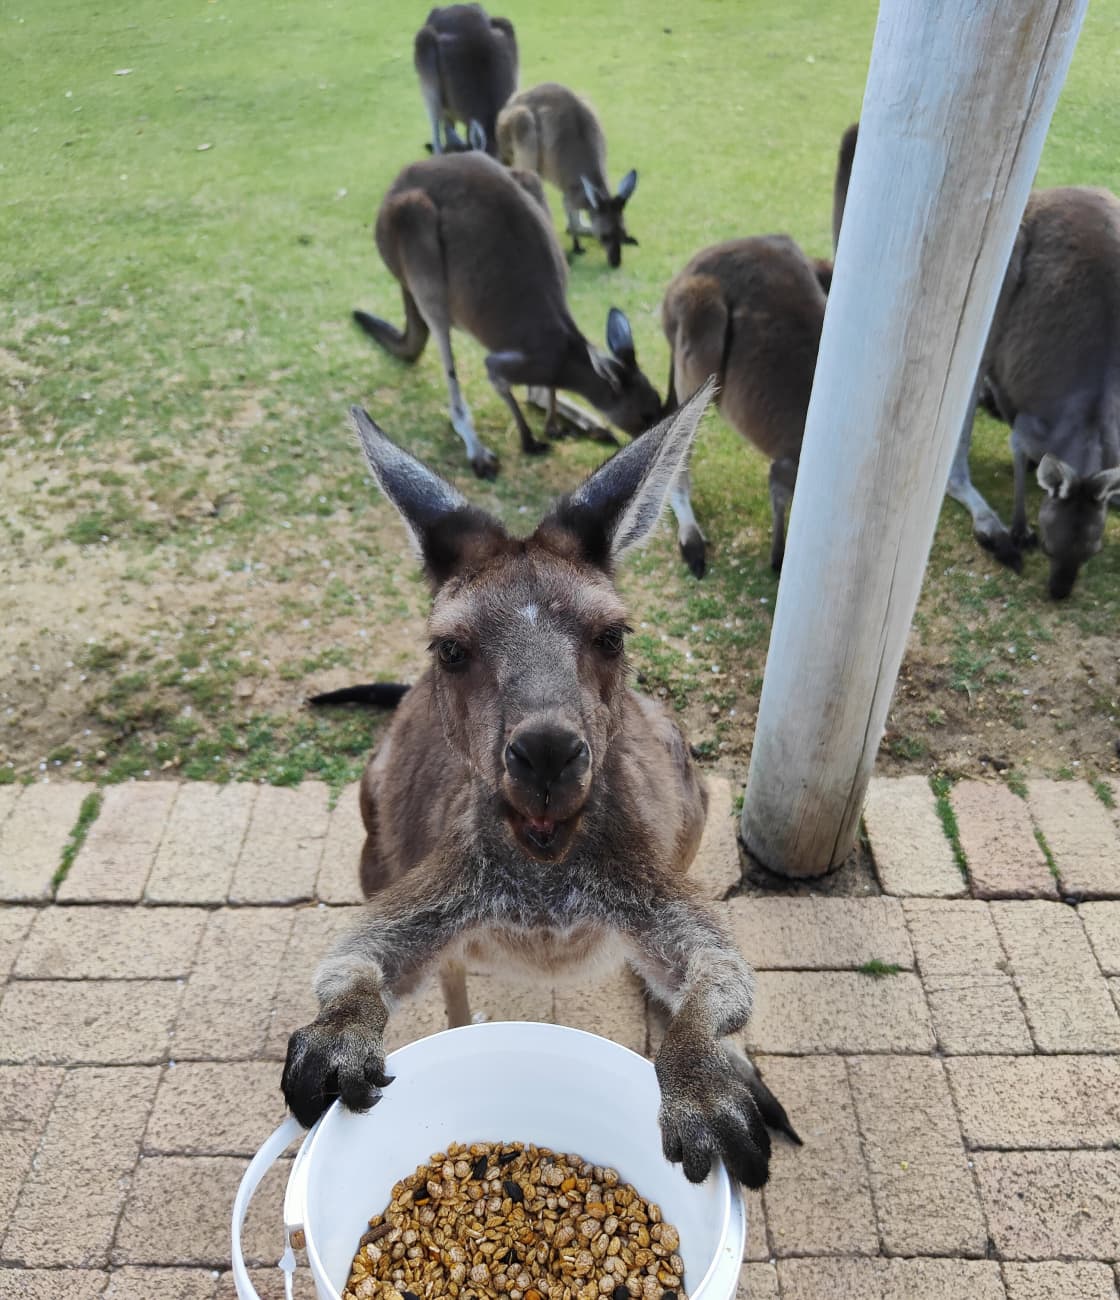 Feed the Kangaroos